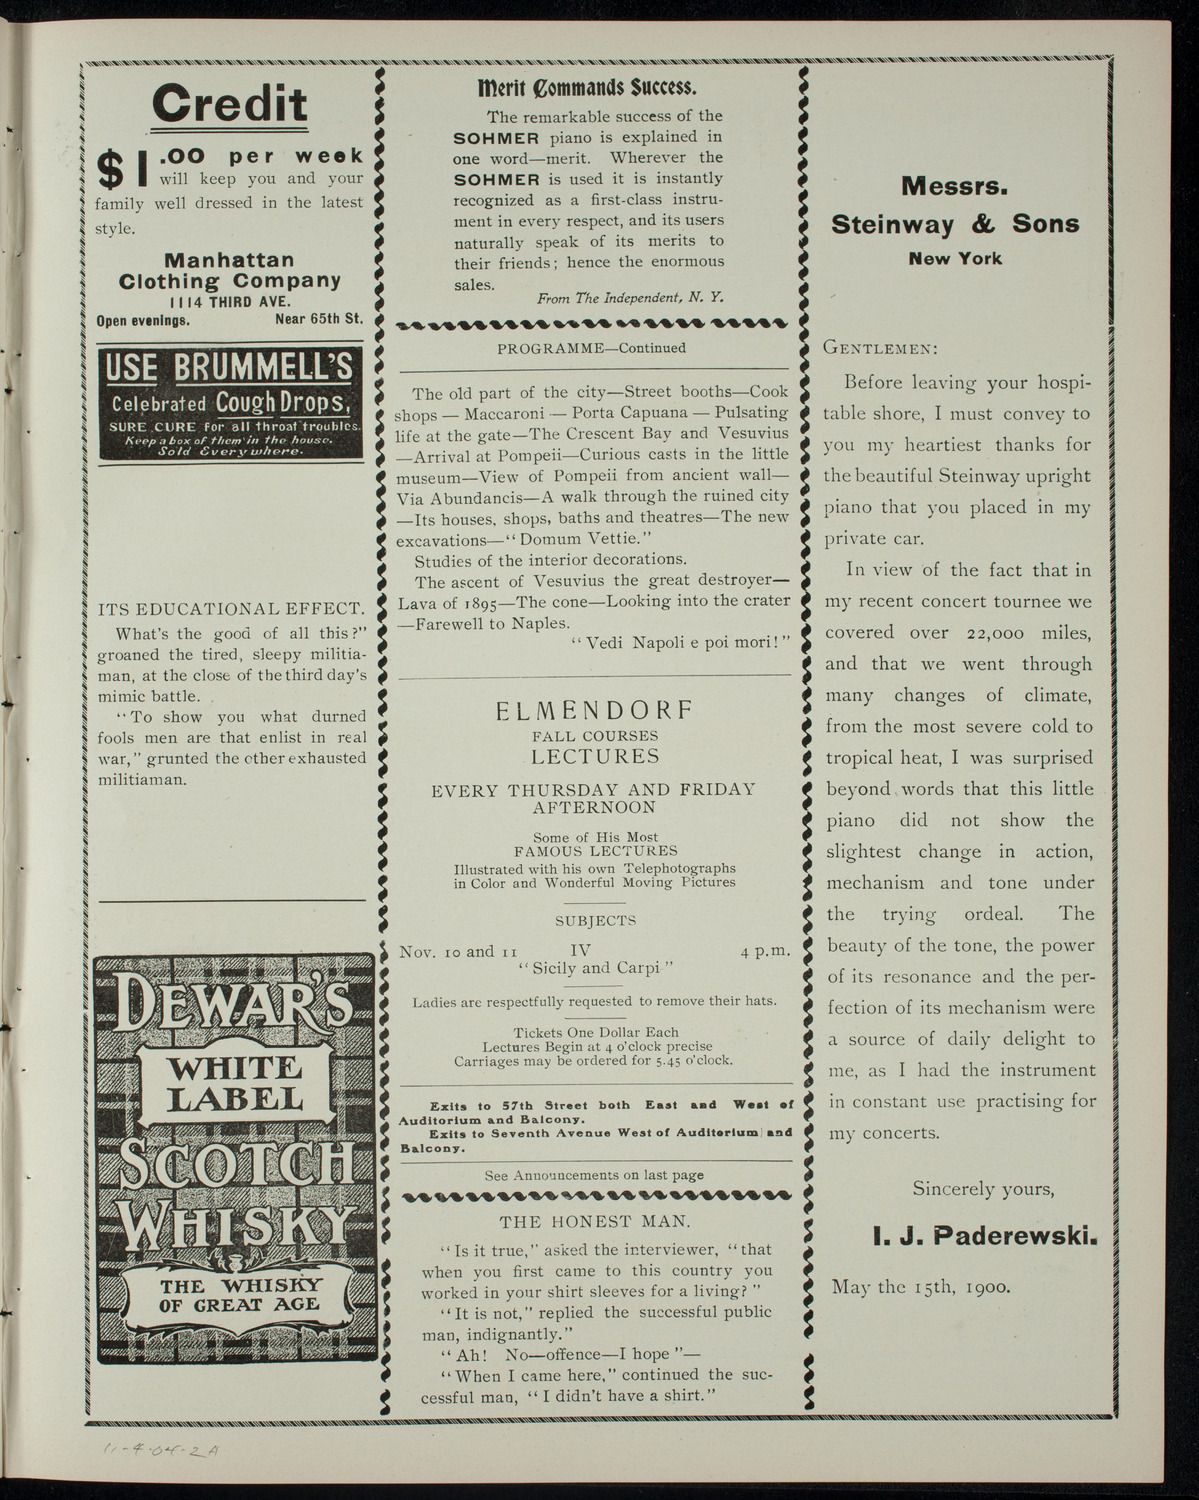 Elmendorf Lecture: Naples, Pompeii, and Vesuvius, November 4, 1904, program page 3